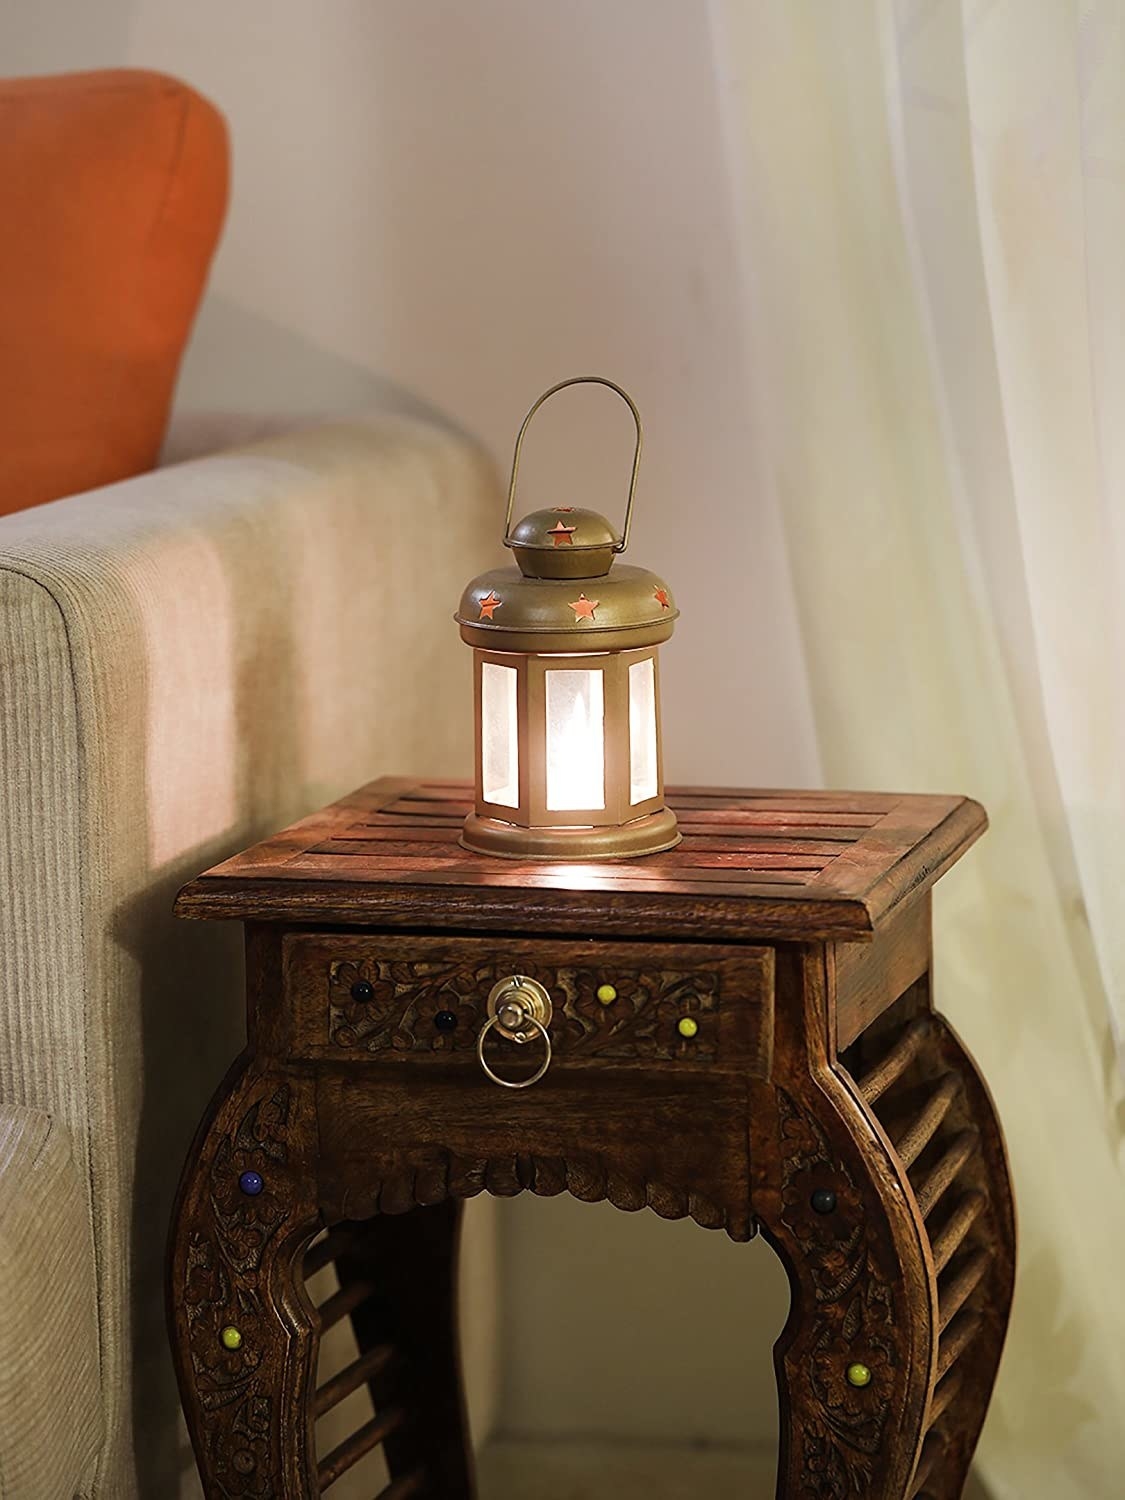 A golden lantern kept on a wooden bedside table.